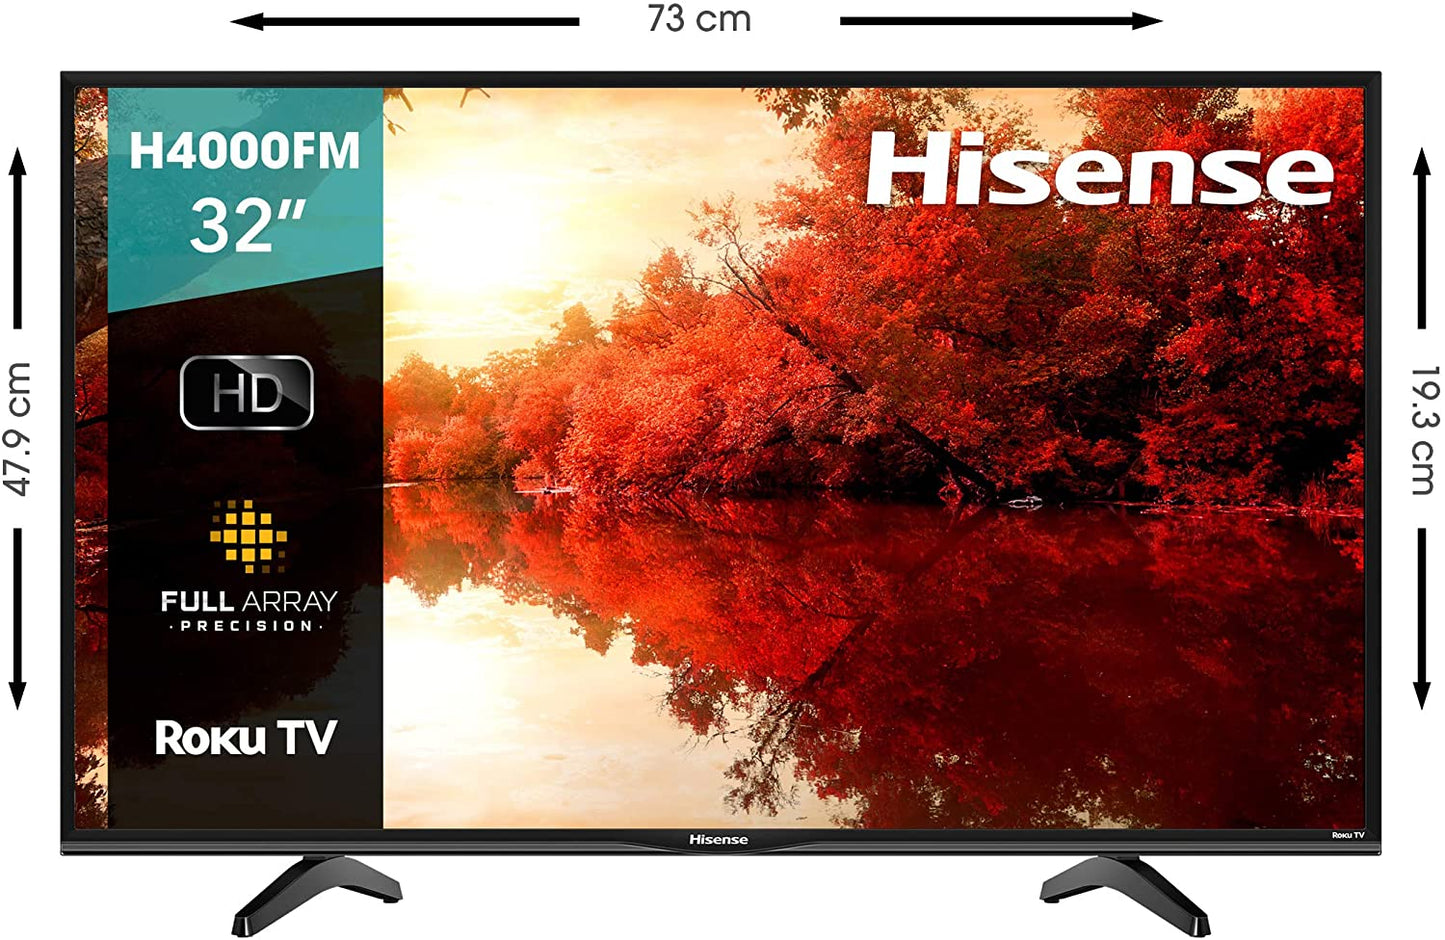 TV Hisense 32H5G SMART, VIDA 32 pulgadas, LED HD, 1366 x 768